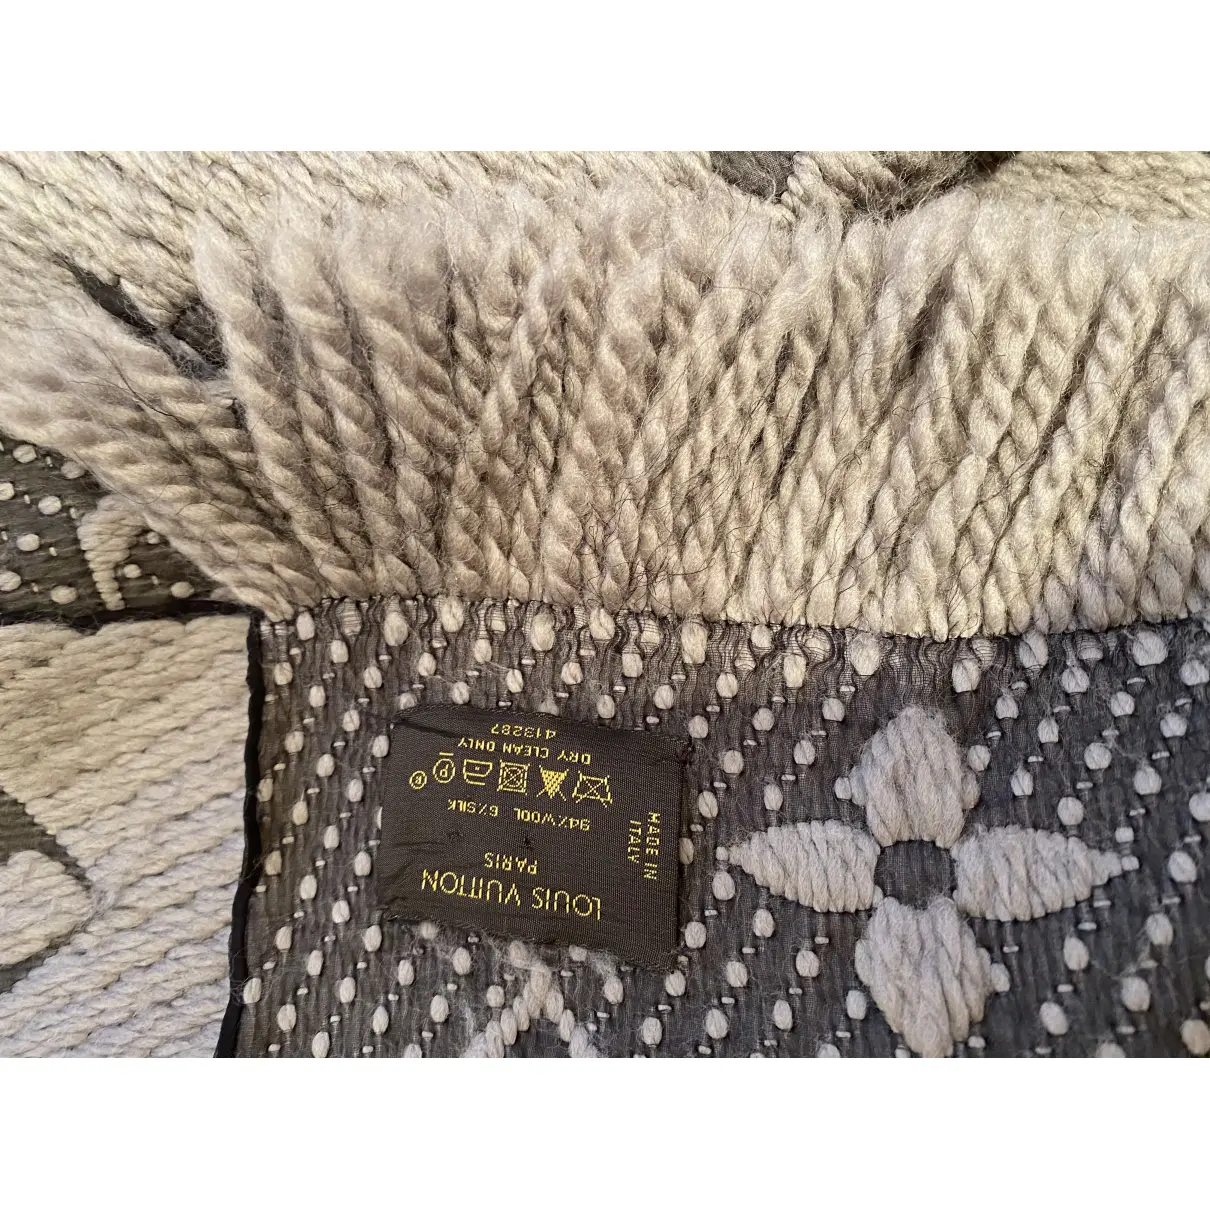 Buy Louis Vuitton Logomania wool scarf online